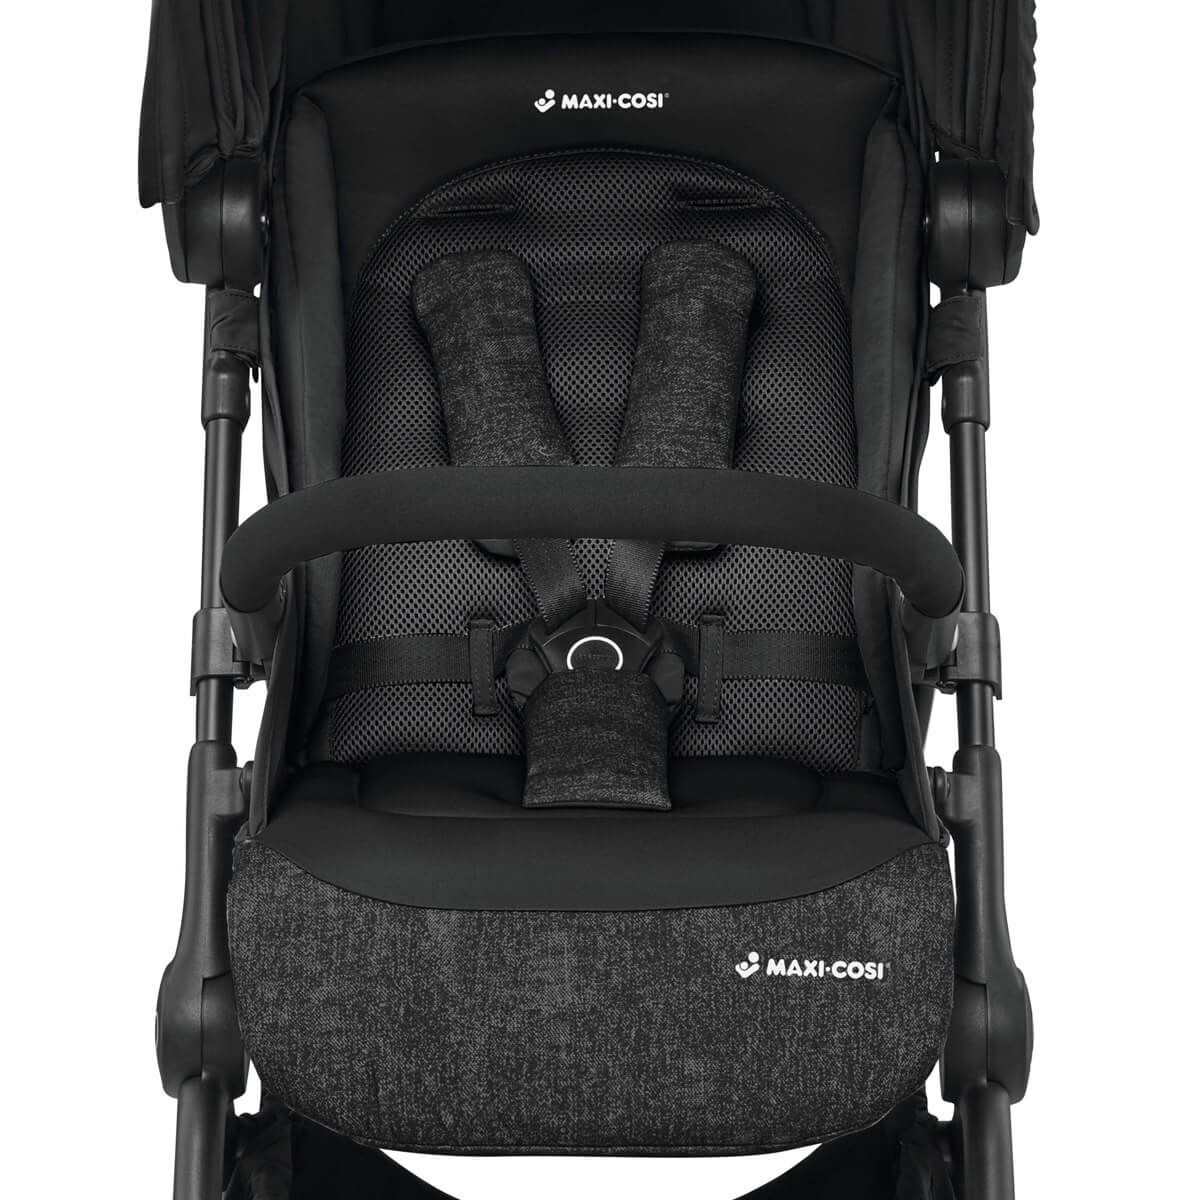 The Maxi-Cosi Lara strollers seat mesh fabrics help baby regulate its temperature